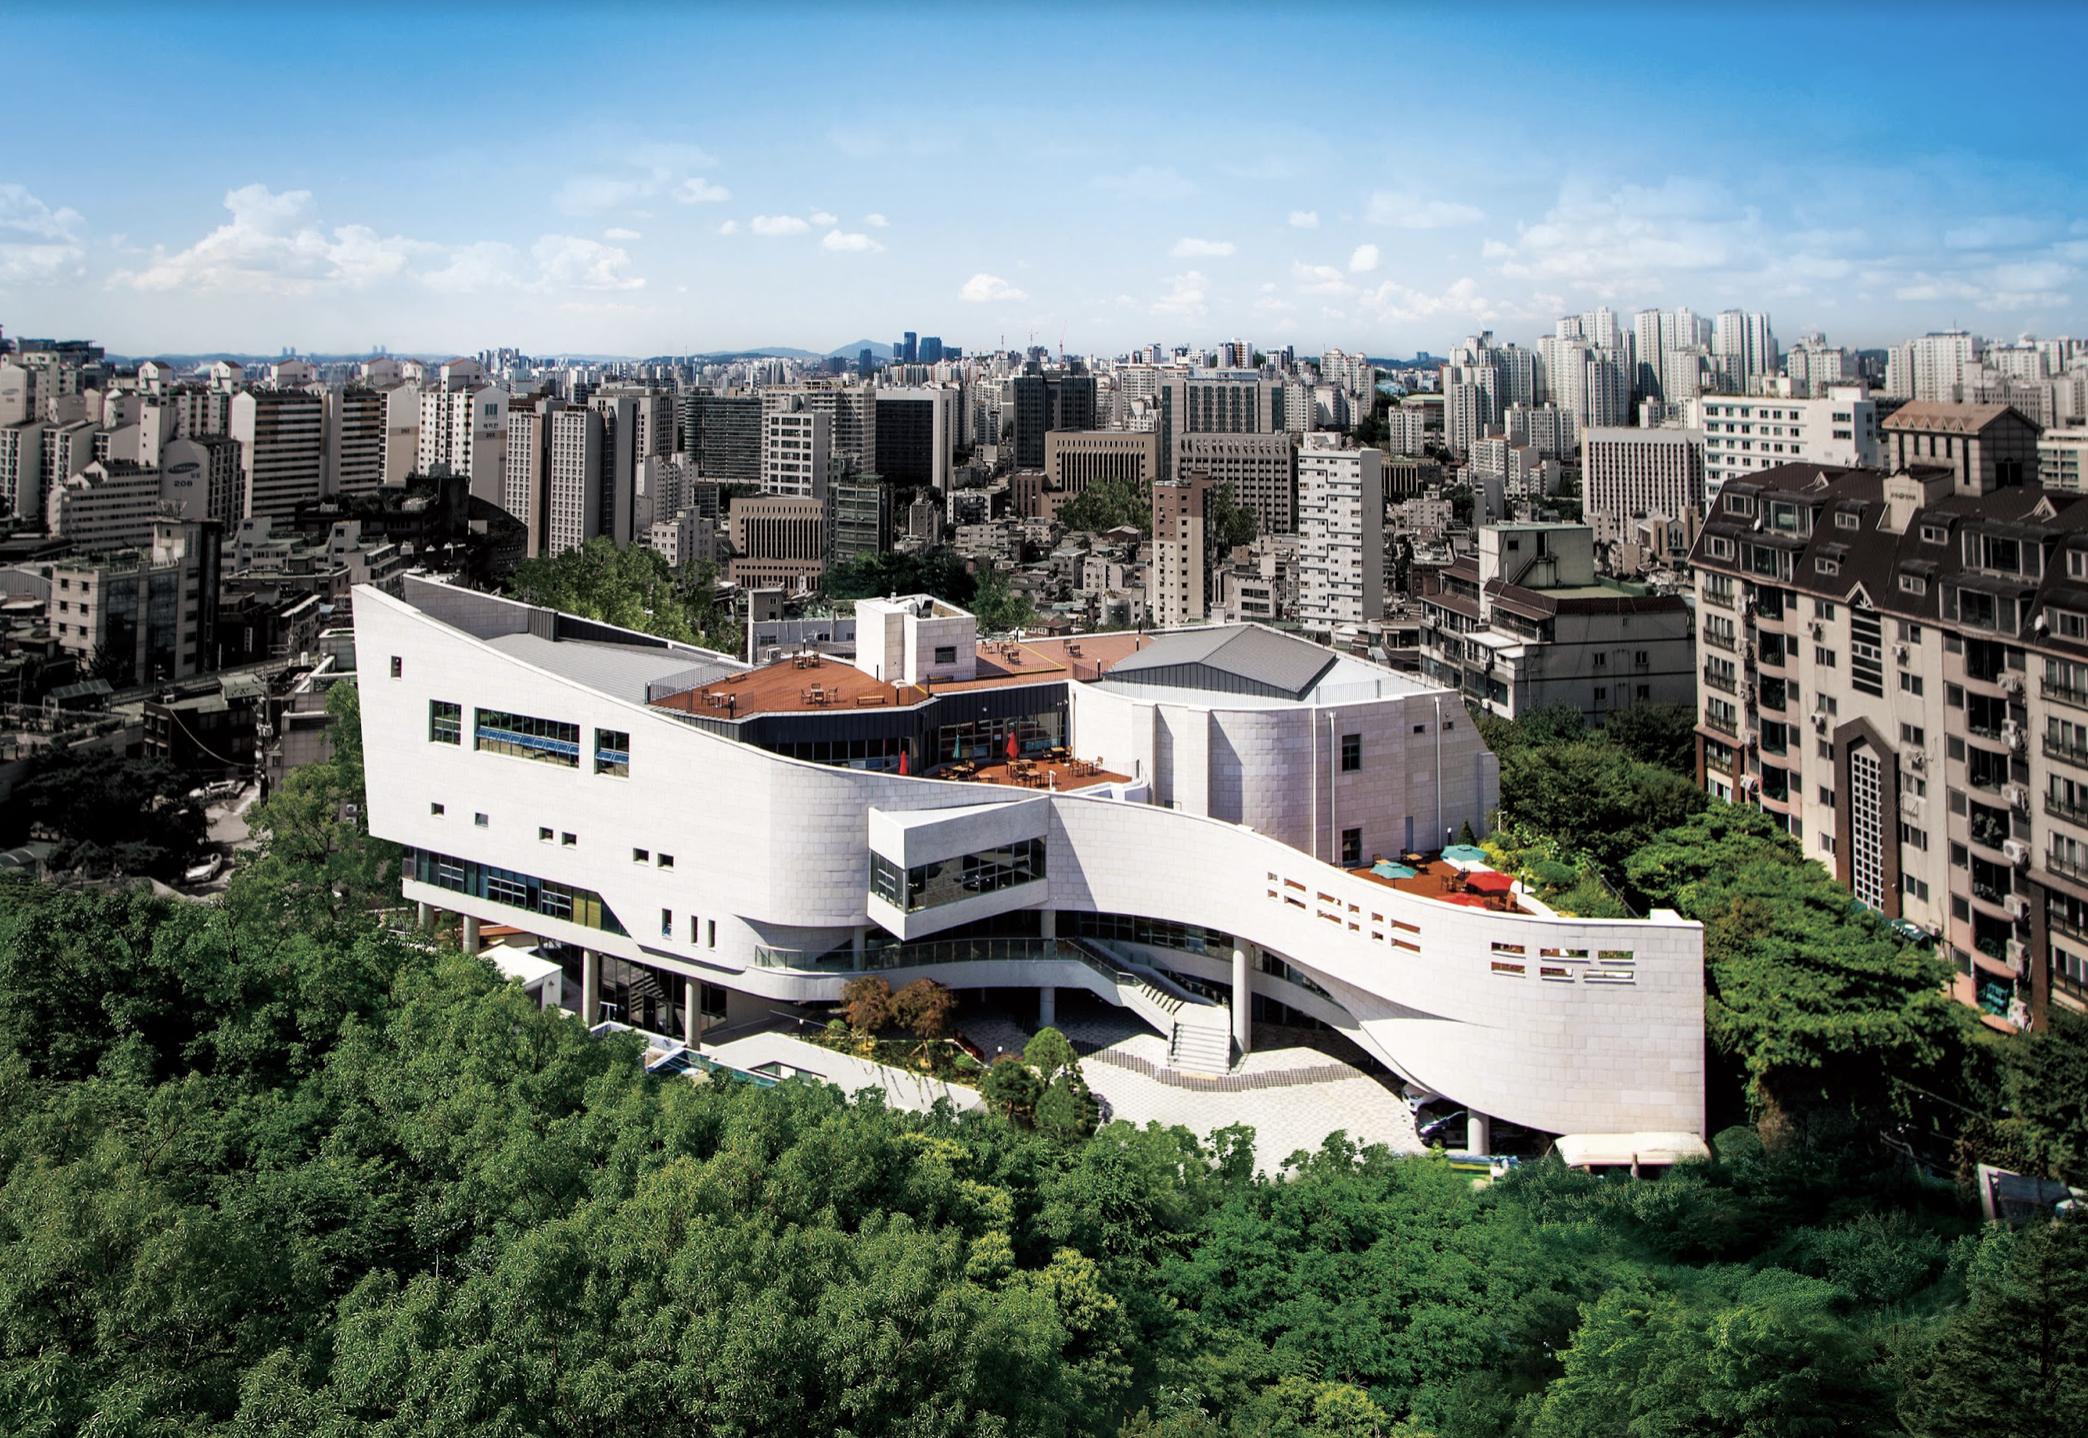 Thinking Christian International School located in Seoul, South Korea.